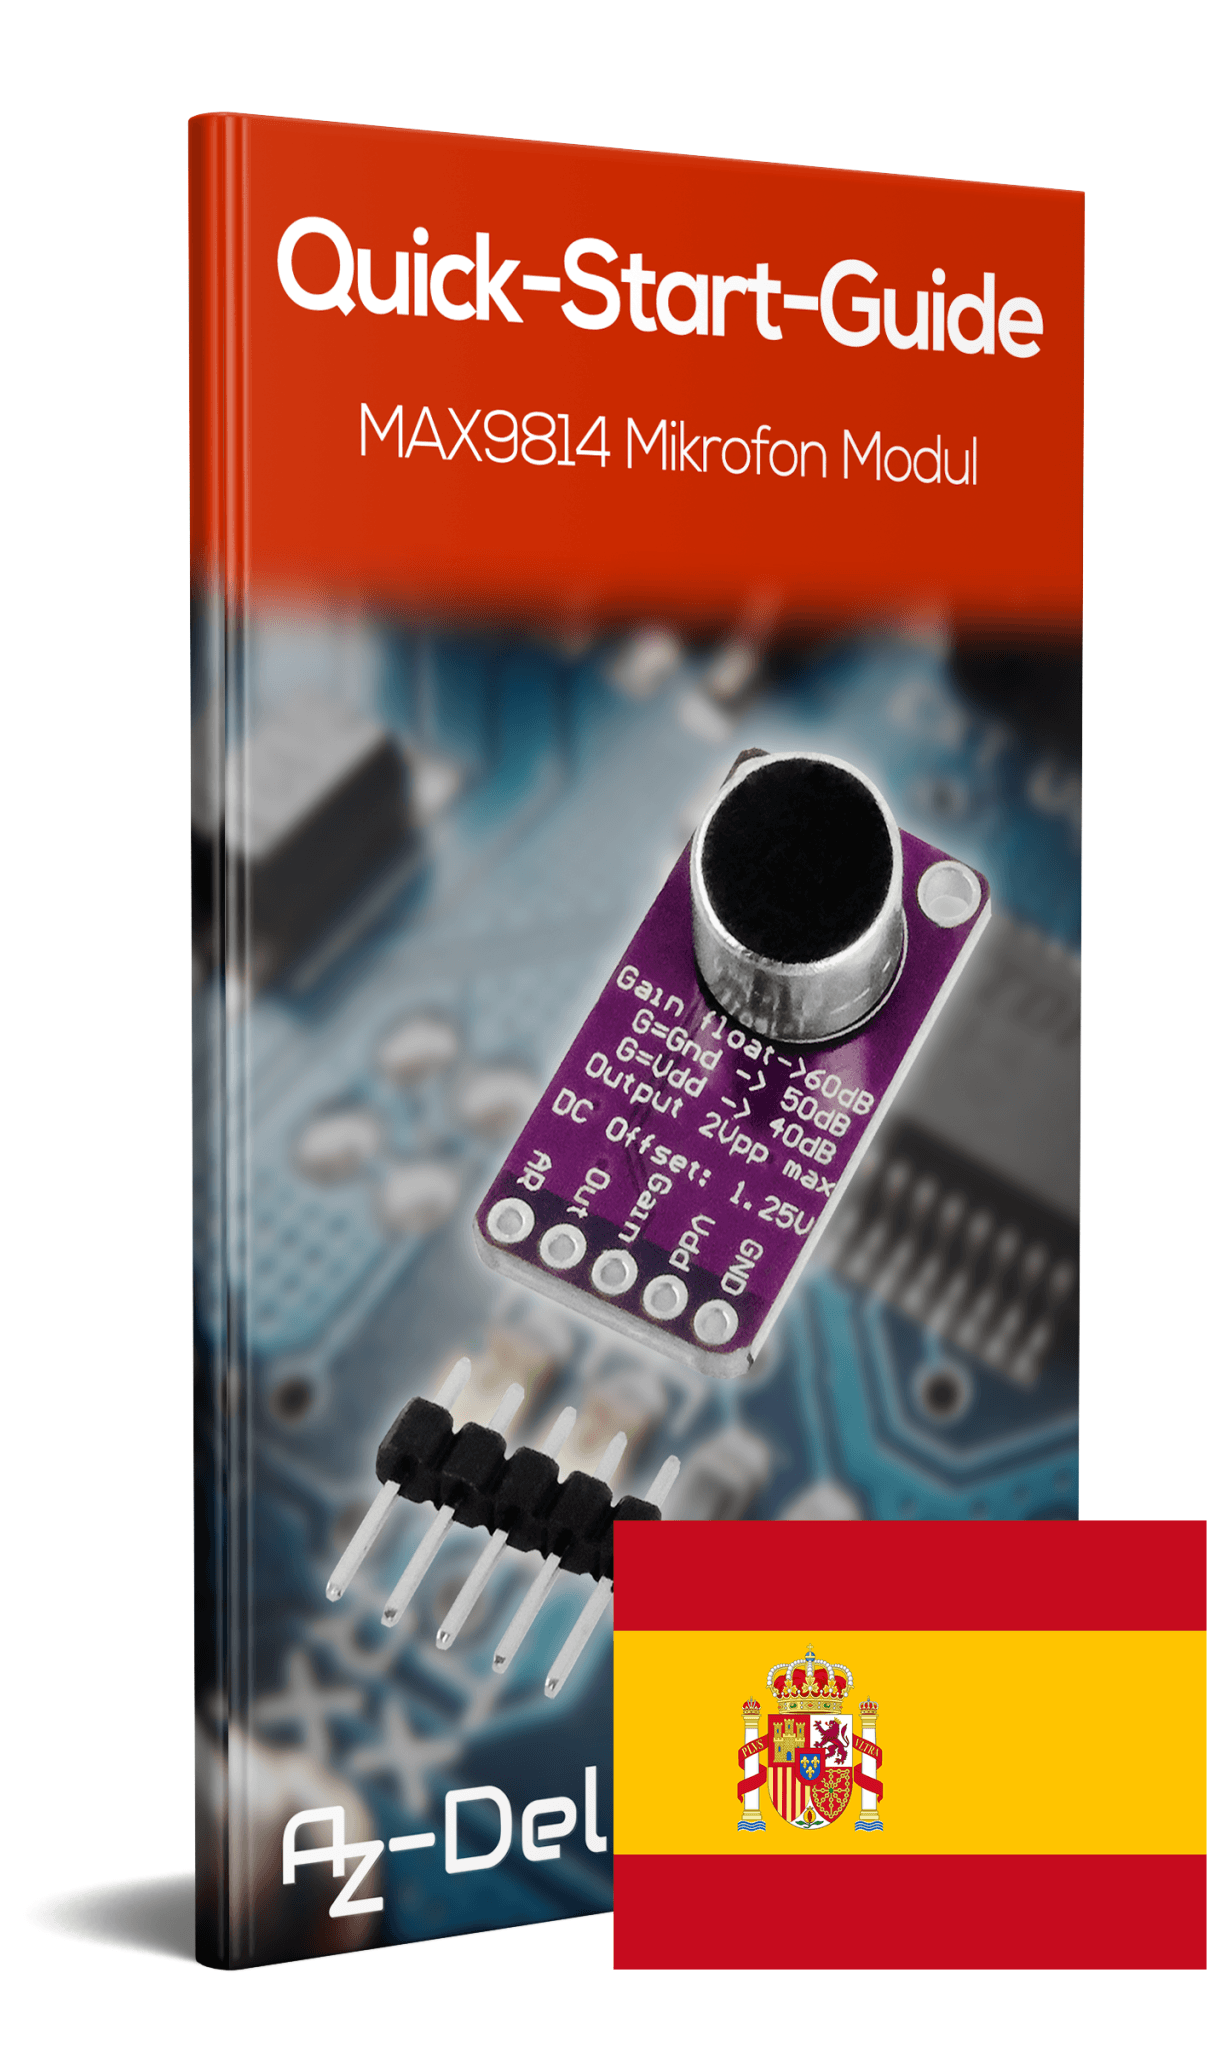 Max9814 Mikrofon - AZ-Delivery